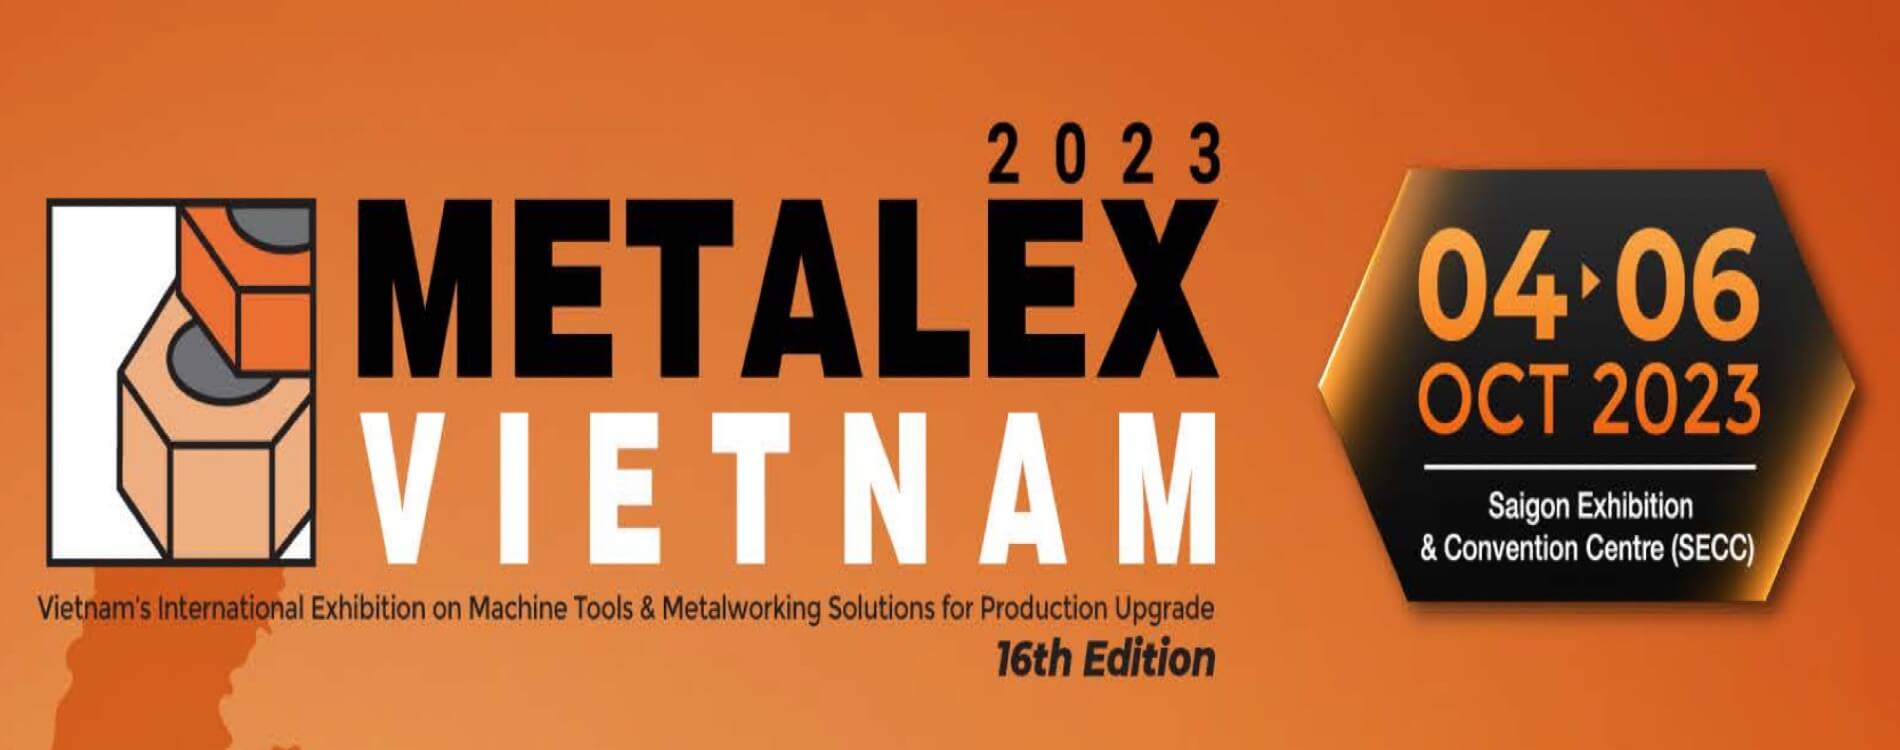 METALEX Vietnam 2023: Creating the Next Giant Manufacturers